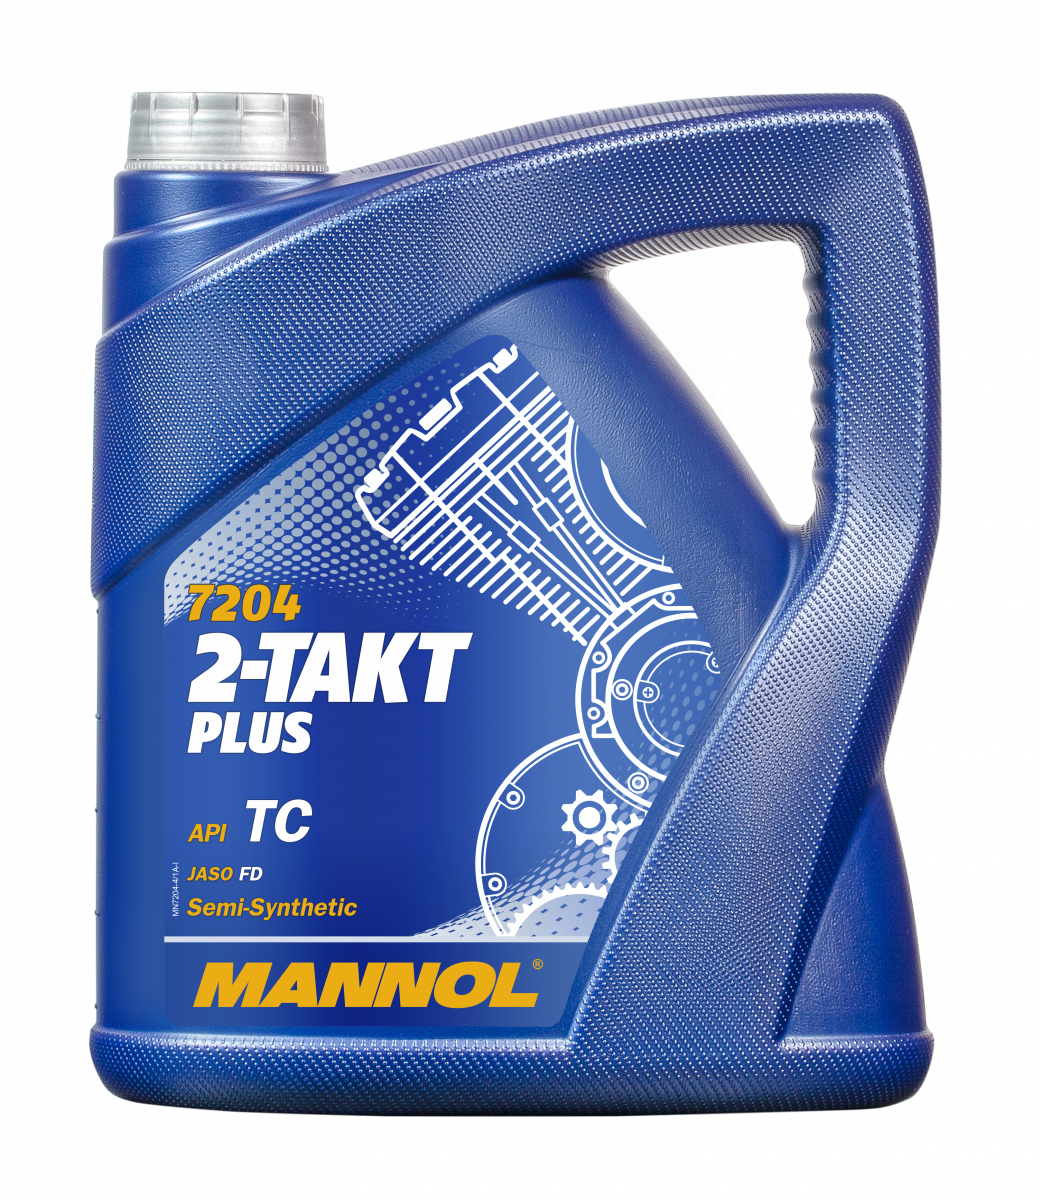 Mannol 2-Takt Plus 4L Two Stroke Engine Oil Api Tc / Jaso Fd Motorcycle Antiwear